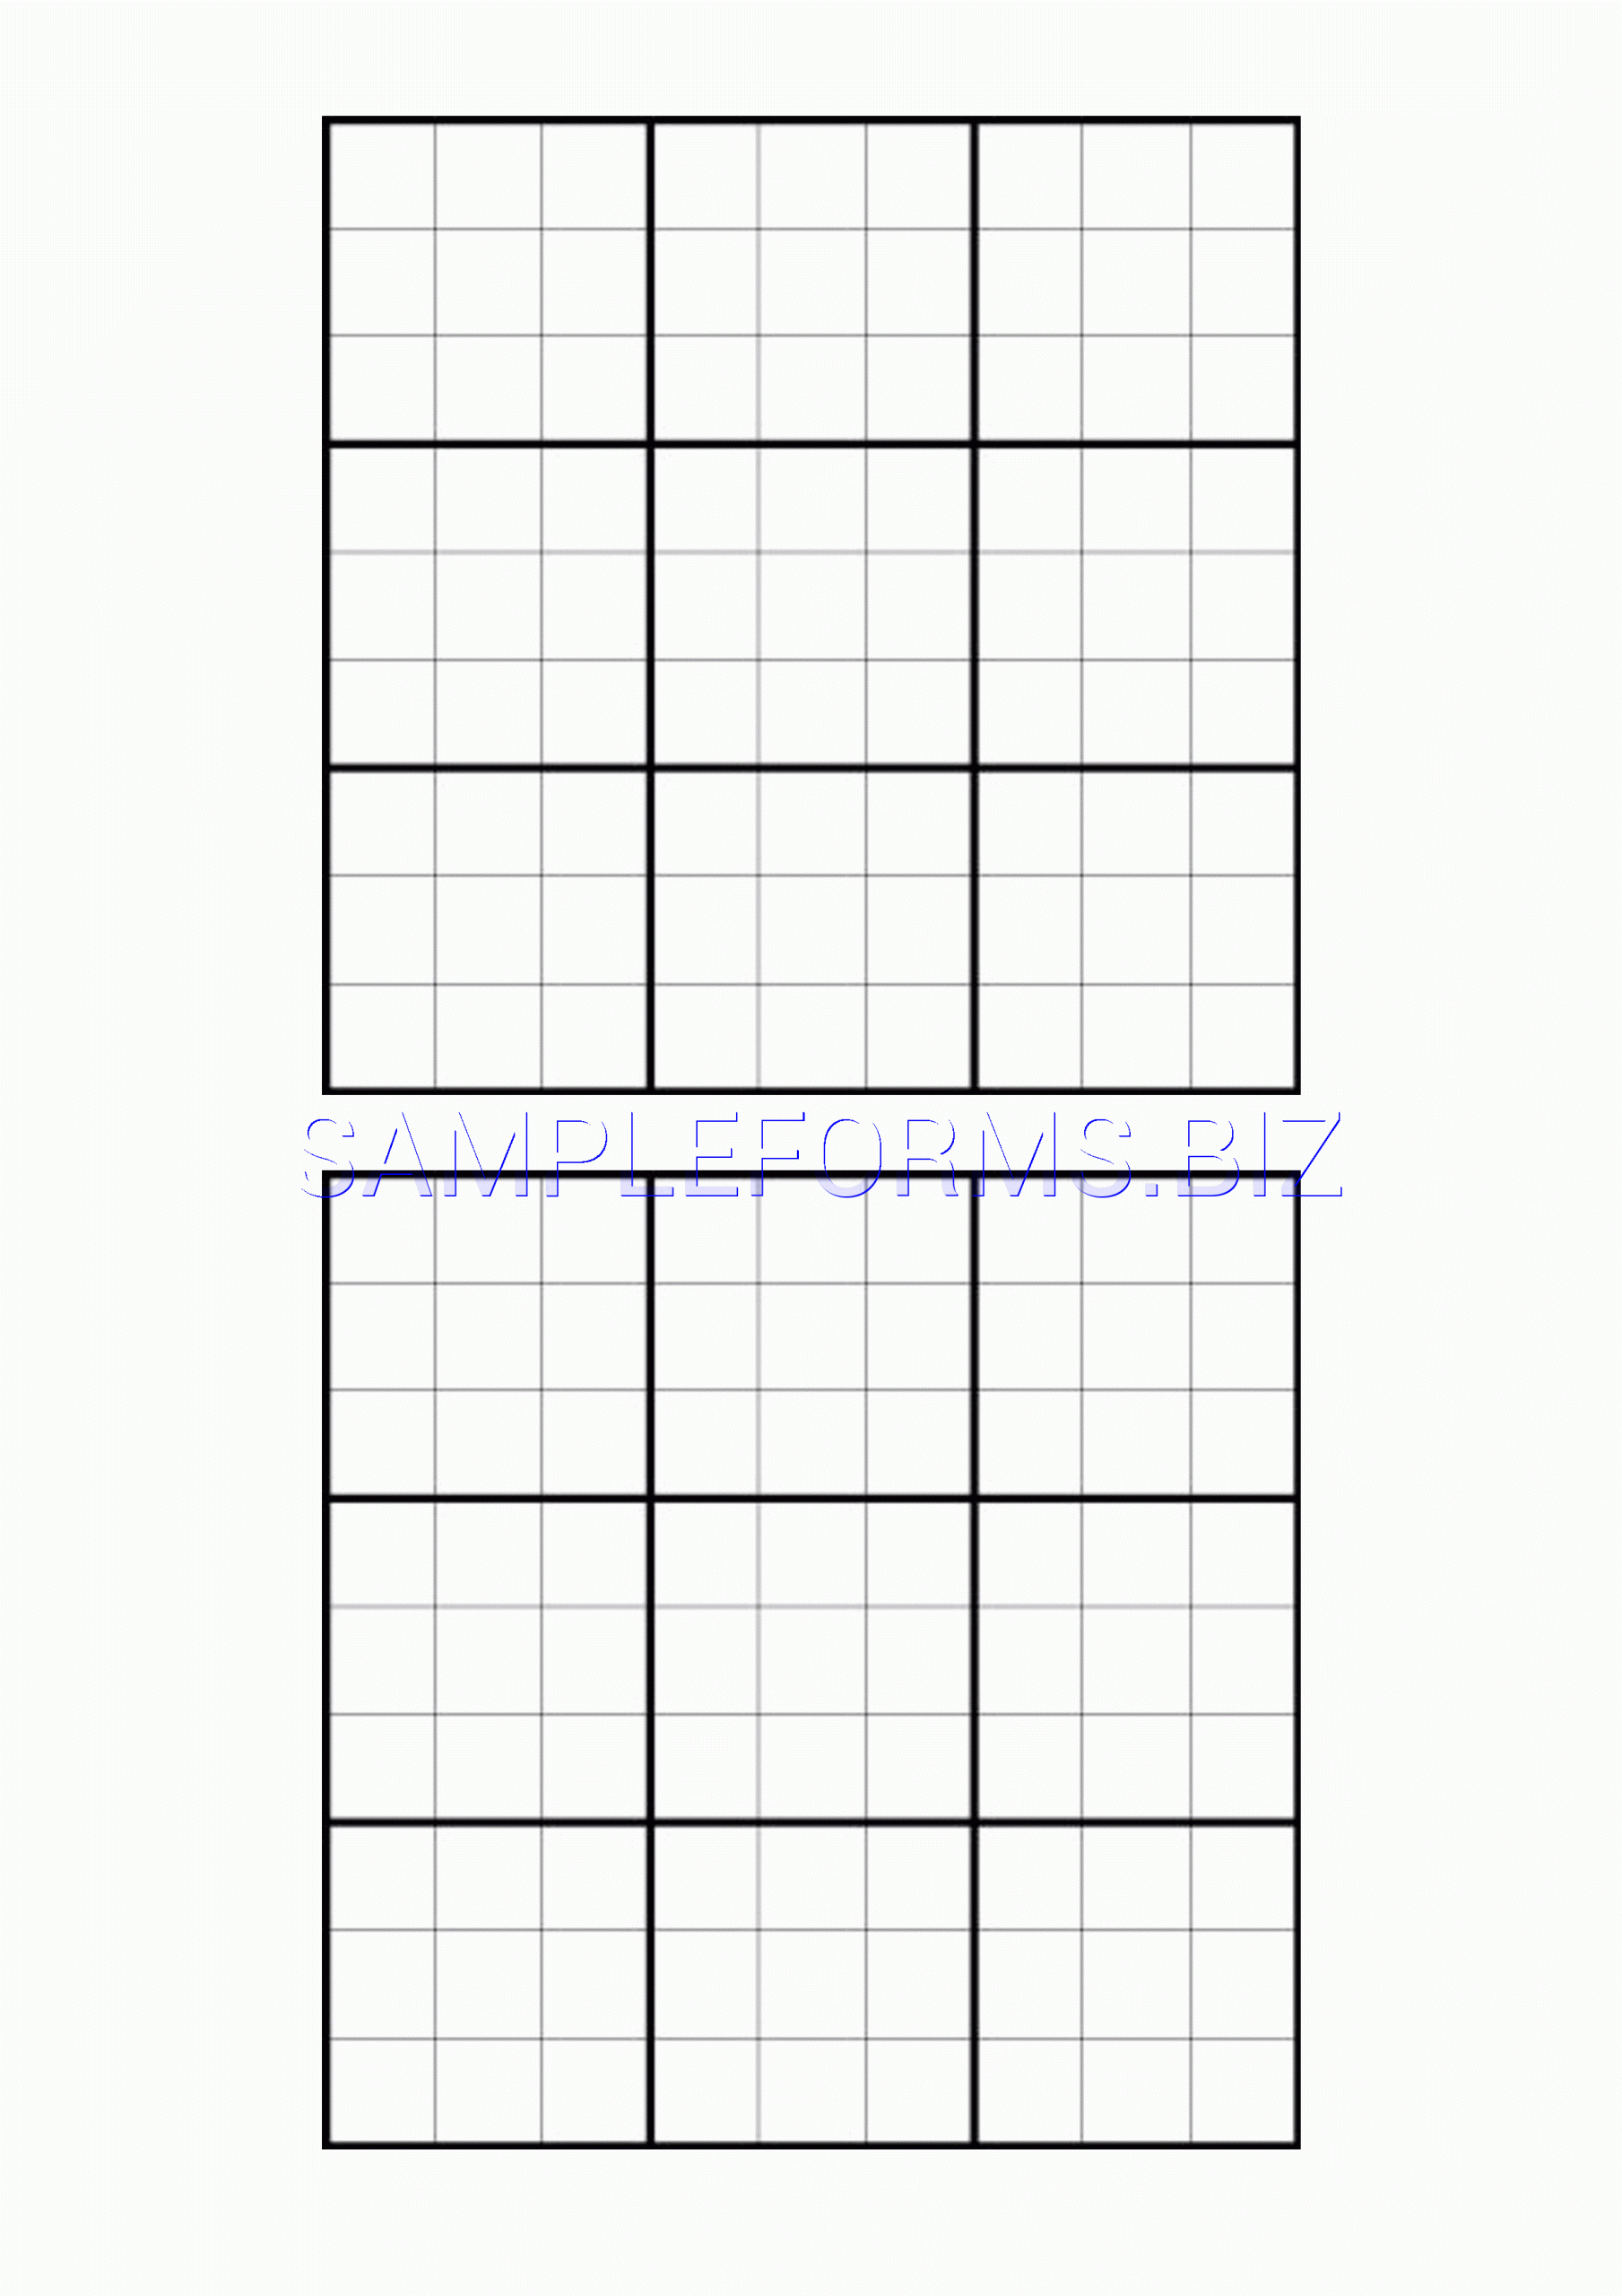 Printable Empty Sudoku